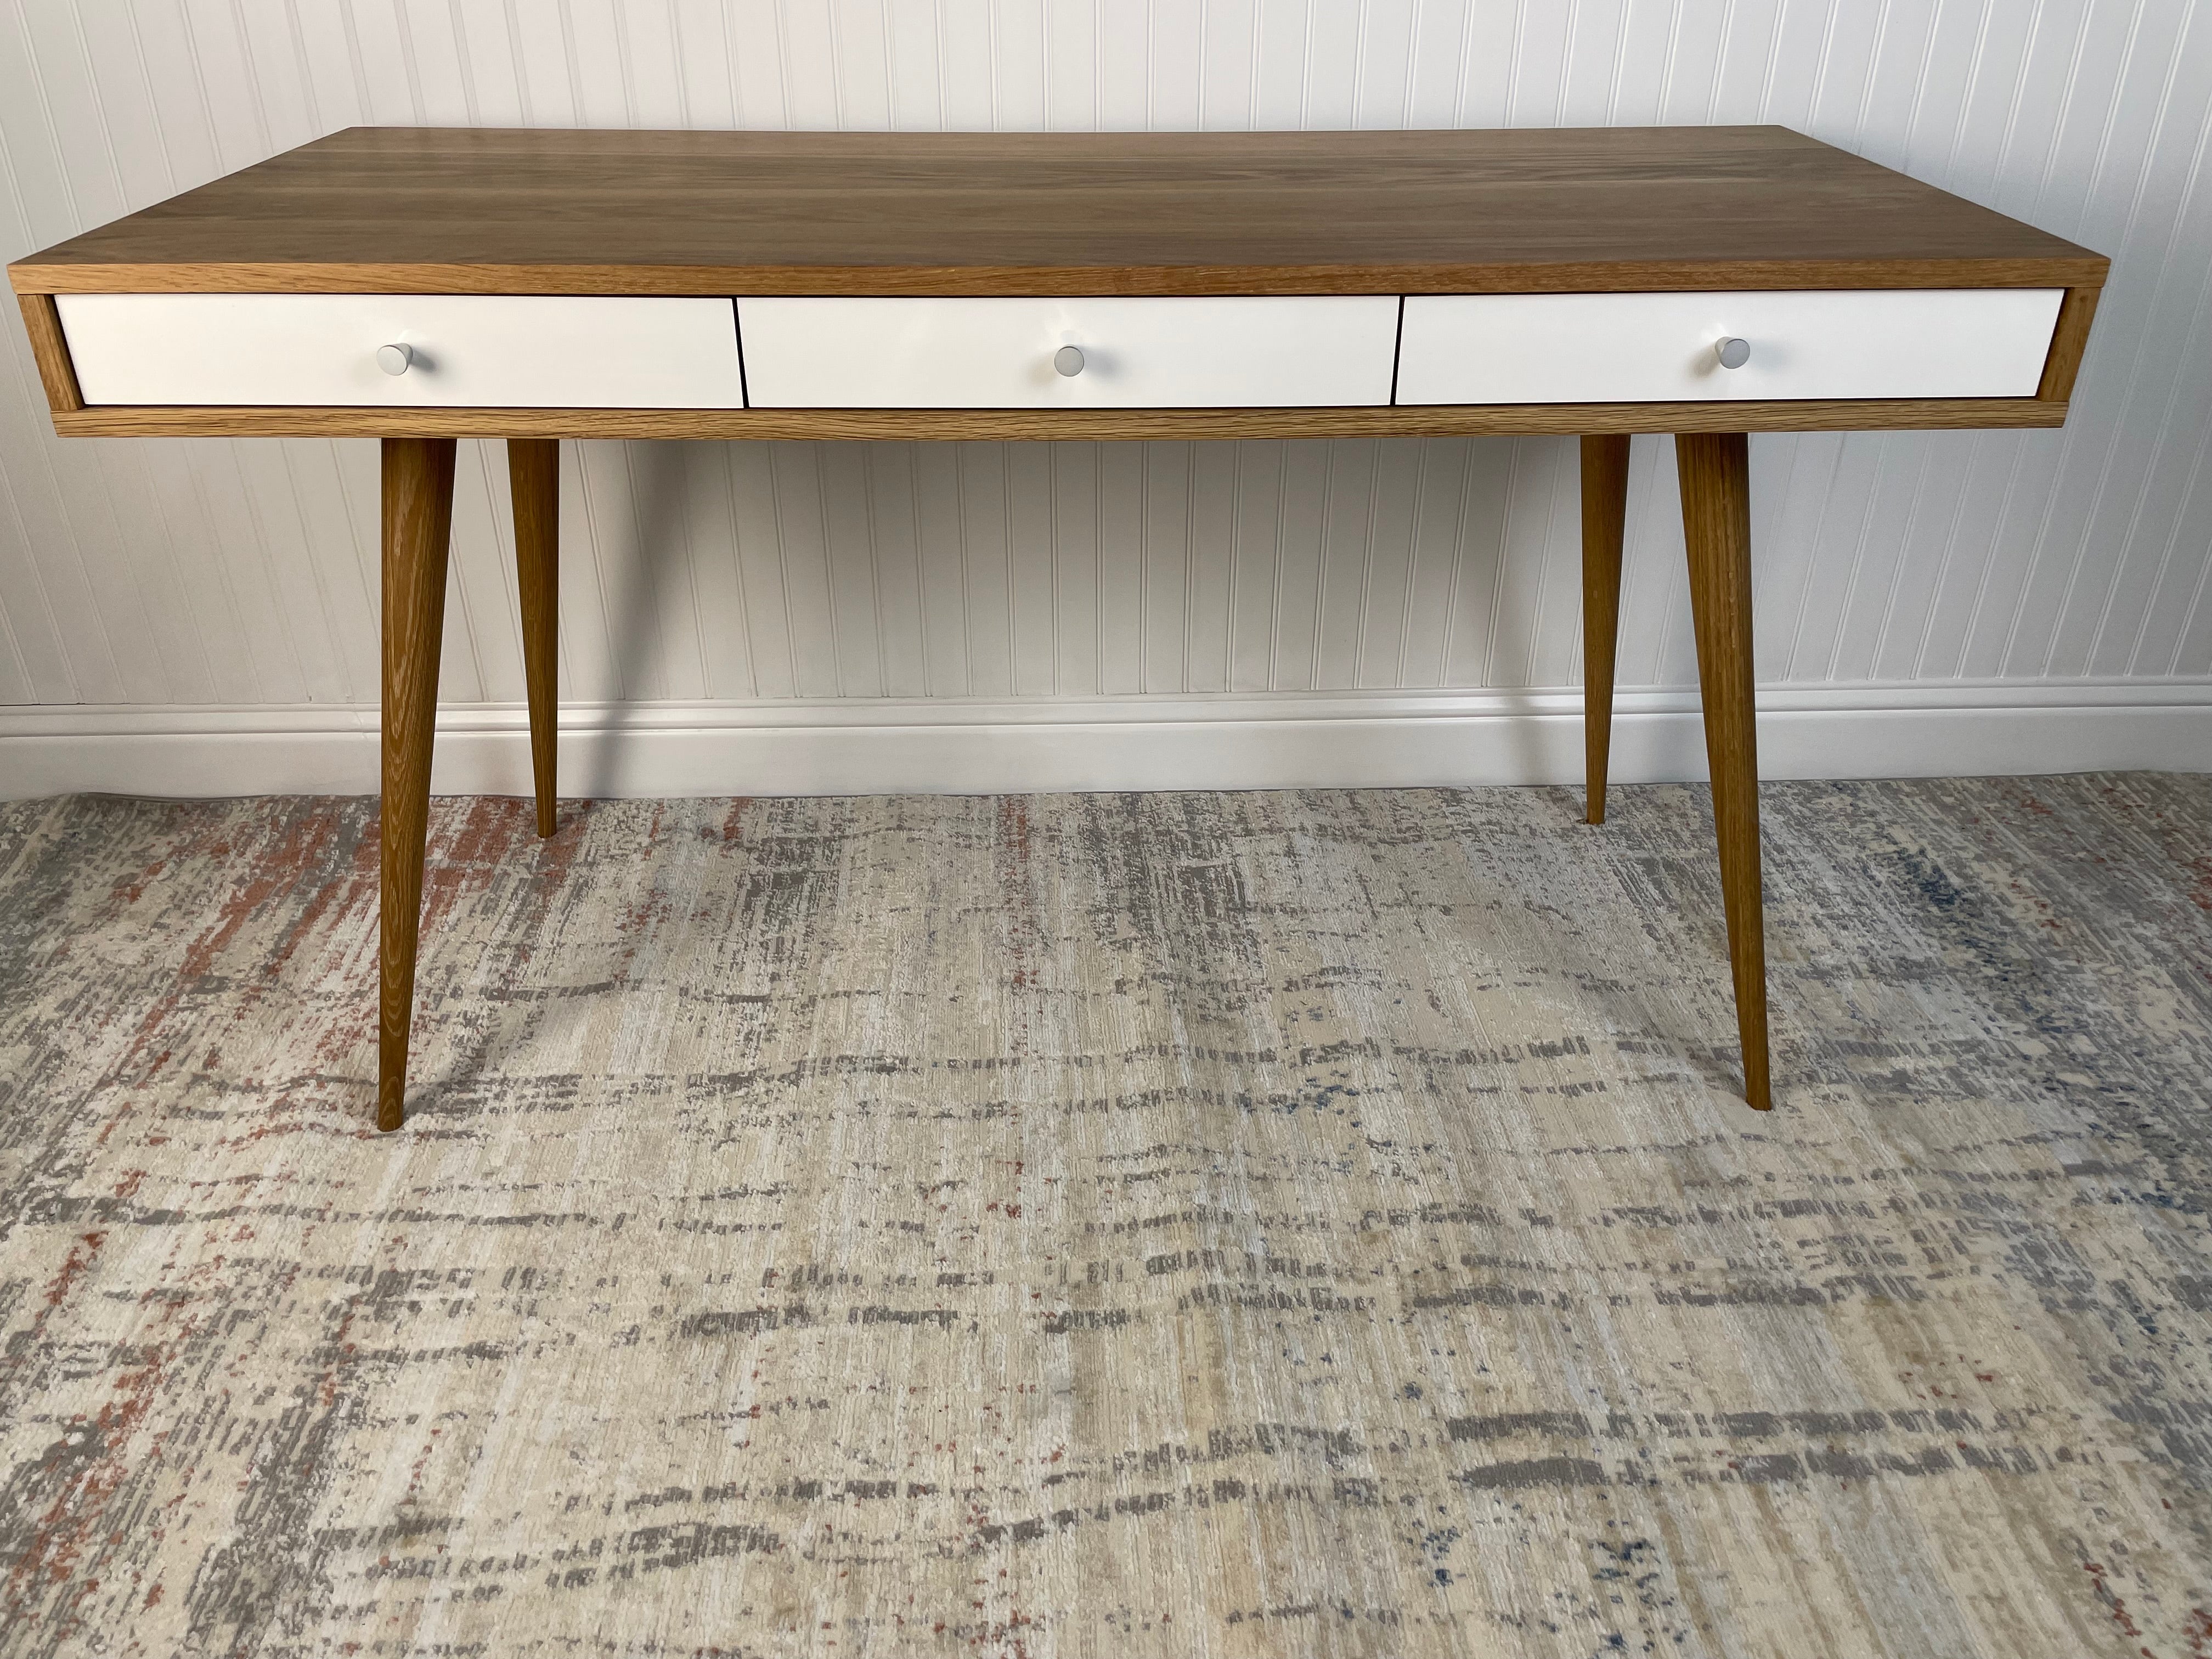 Ecworld Modern Design Workstation Desk with Hidden Cord Management Panels - Pine